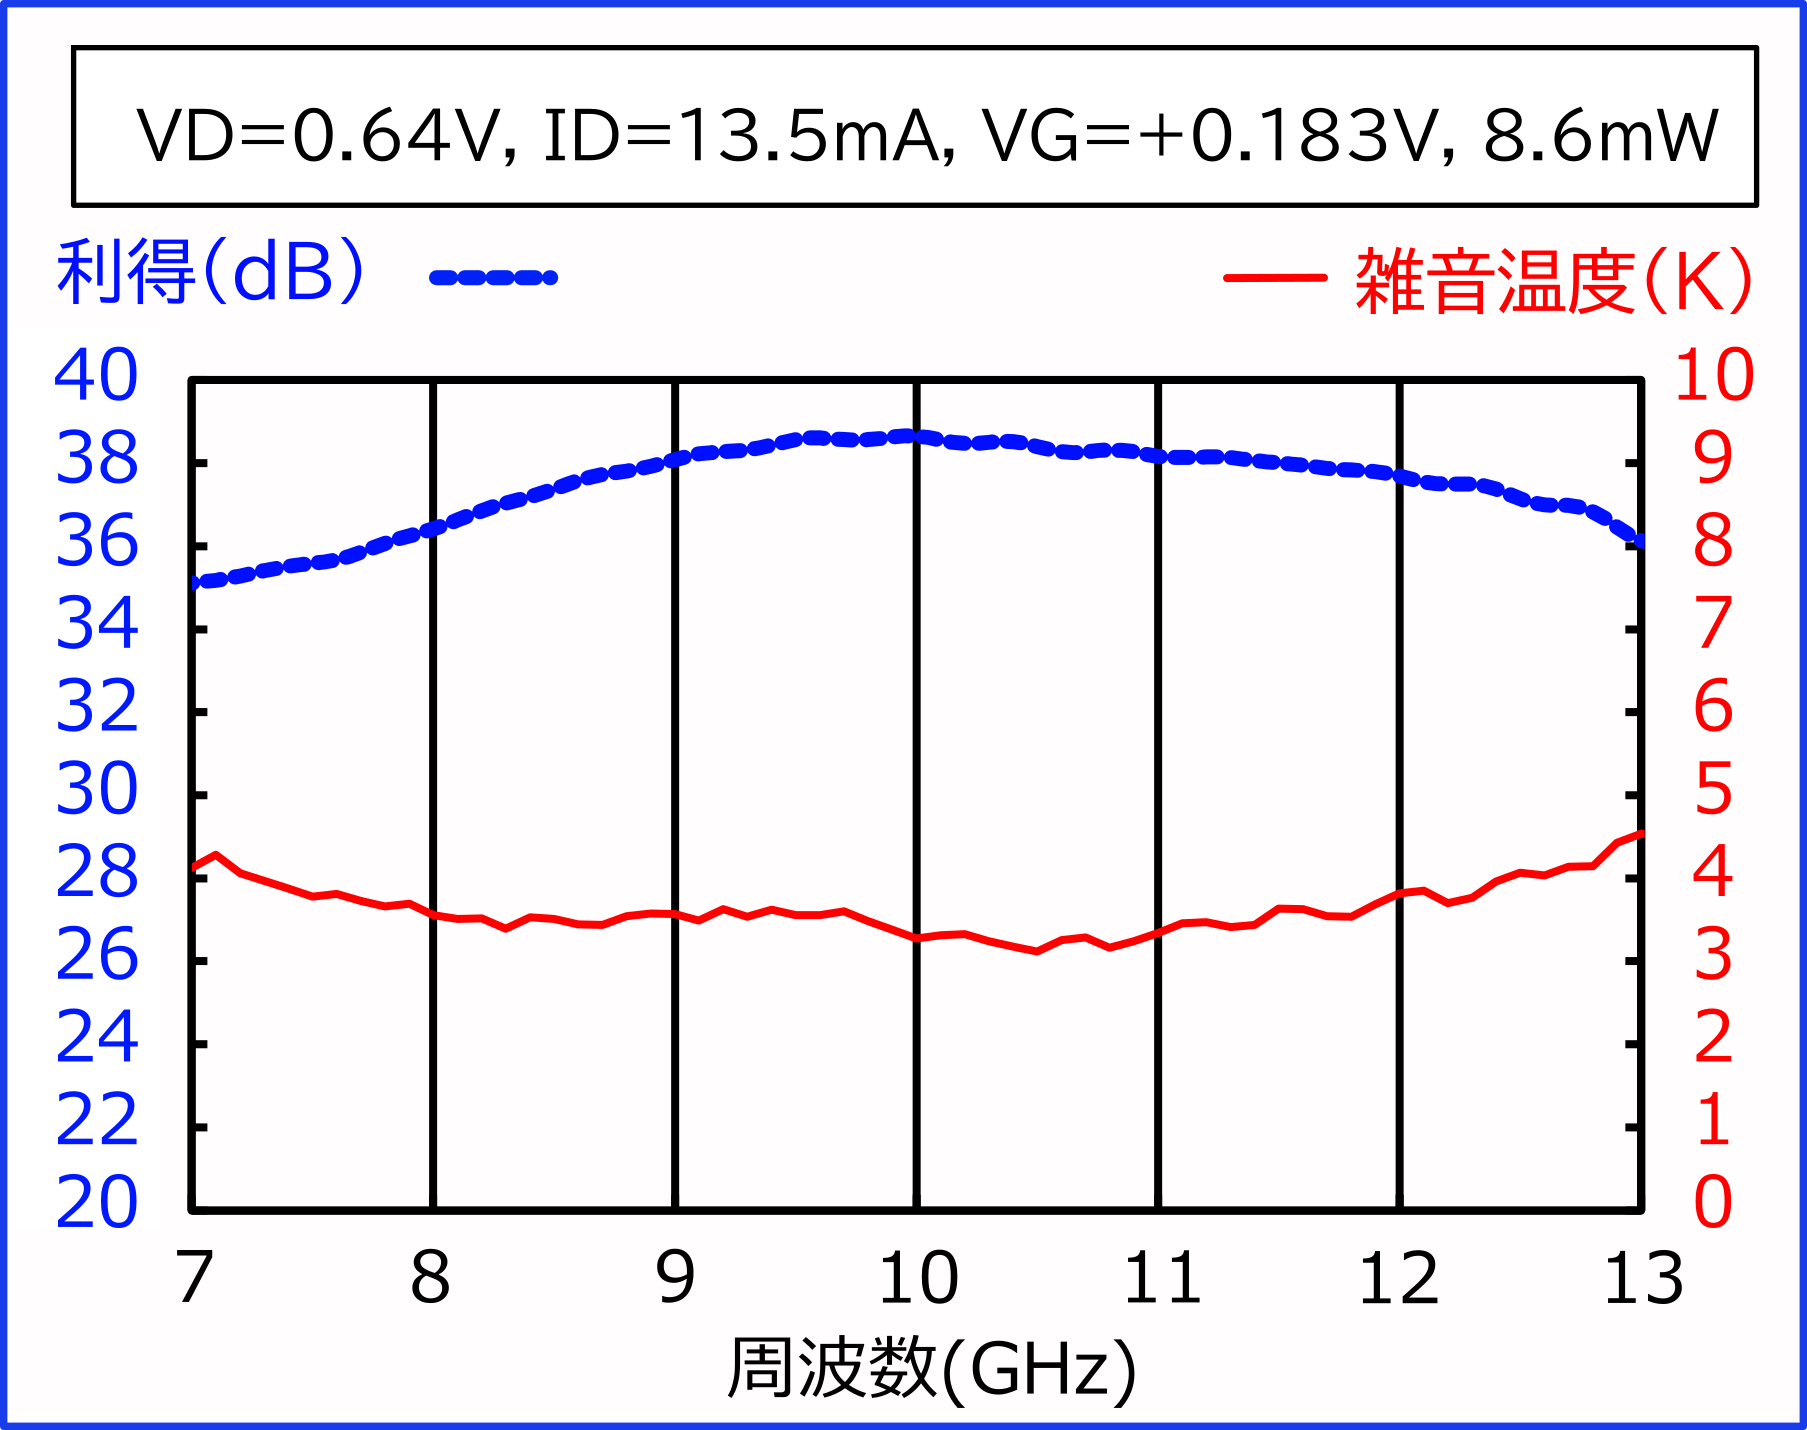 [Graph] VD=0.64V, ID=13.5mA, VG=+0.183V, 8.6mW